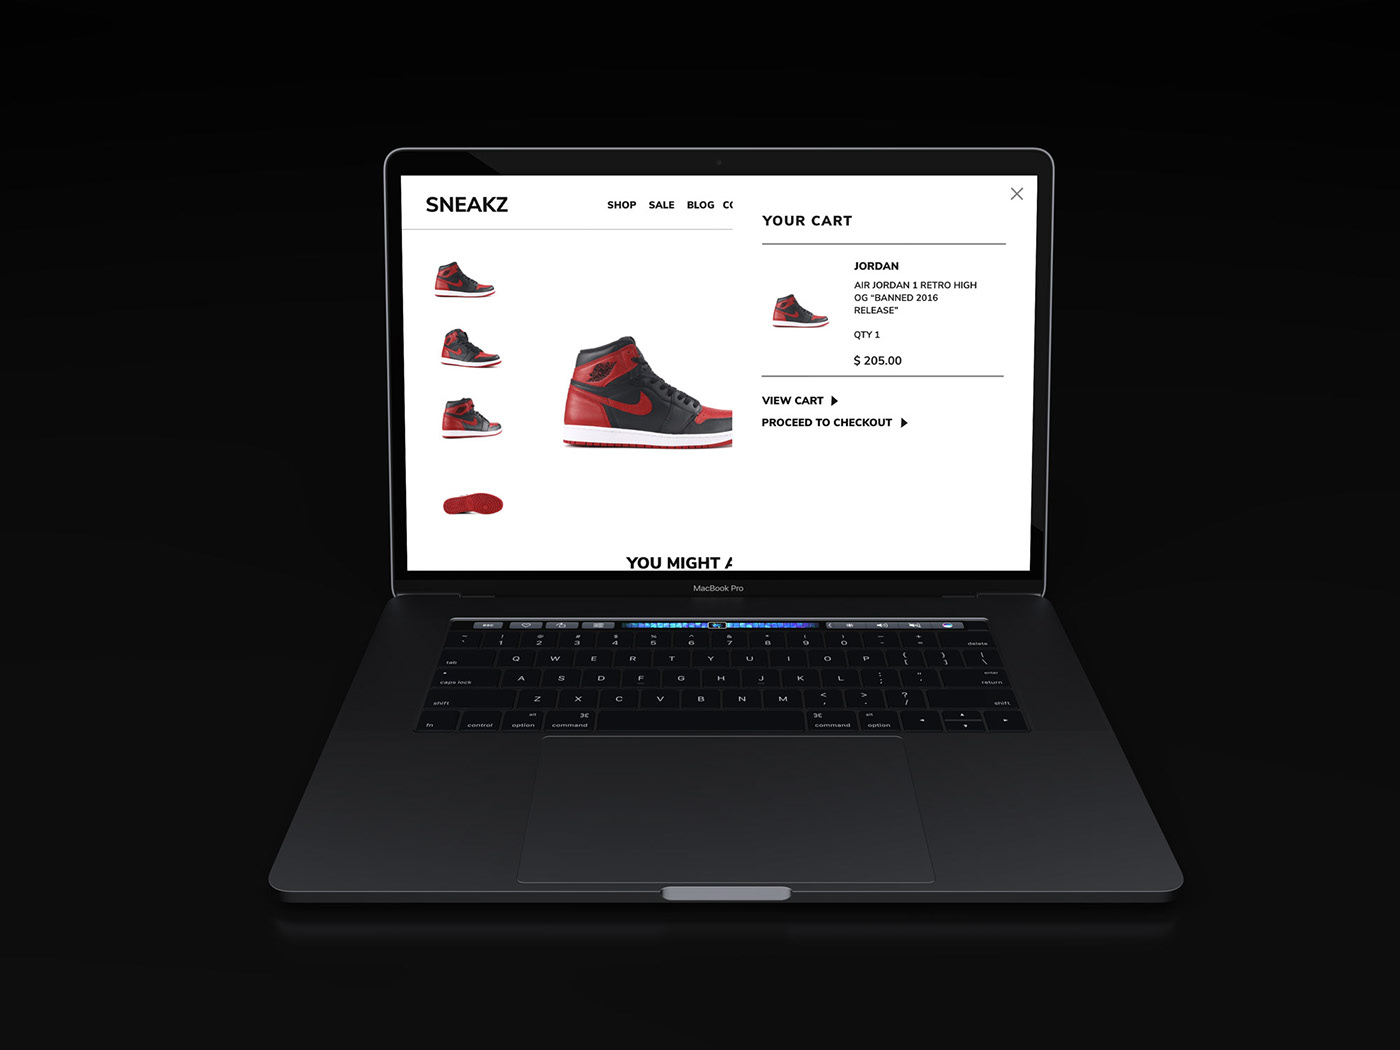 xddailychallenge UI ux Website Design e-commerce cart pop-up sneakers shop